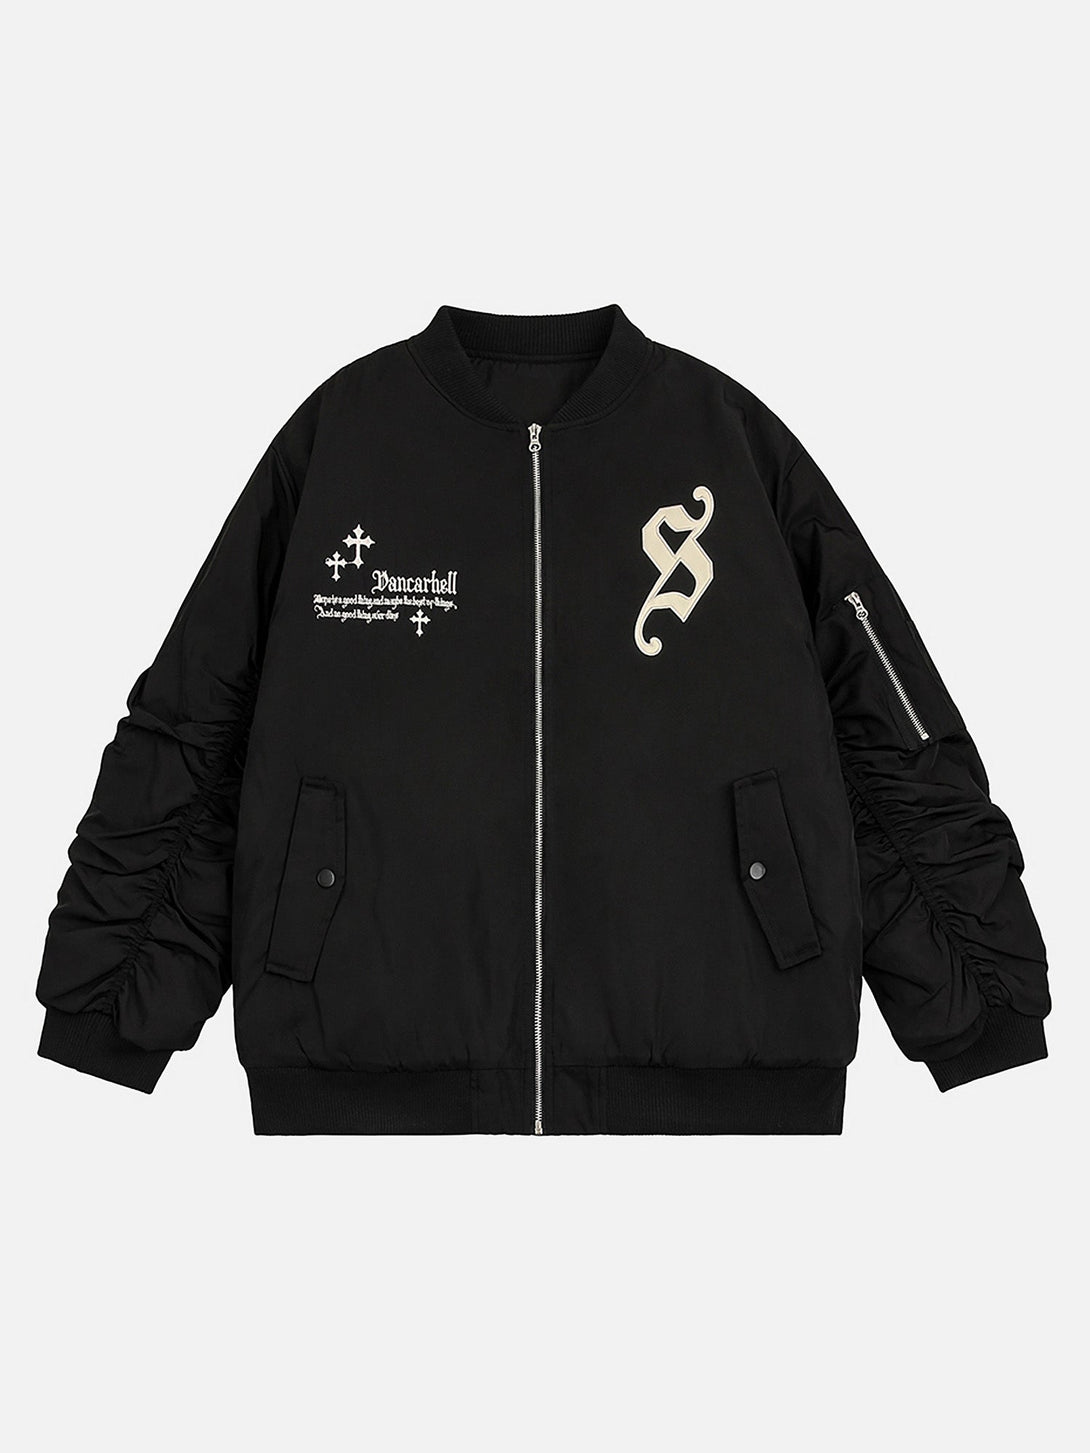 Majesda® - Dark Baseball Jacket- Outfit Ideas - Streetwear Fashion - majesda.com